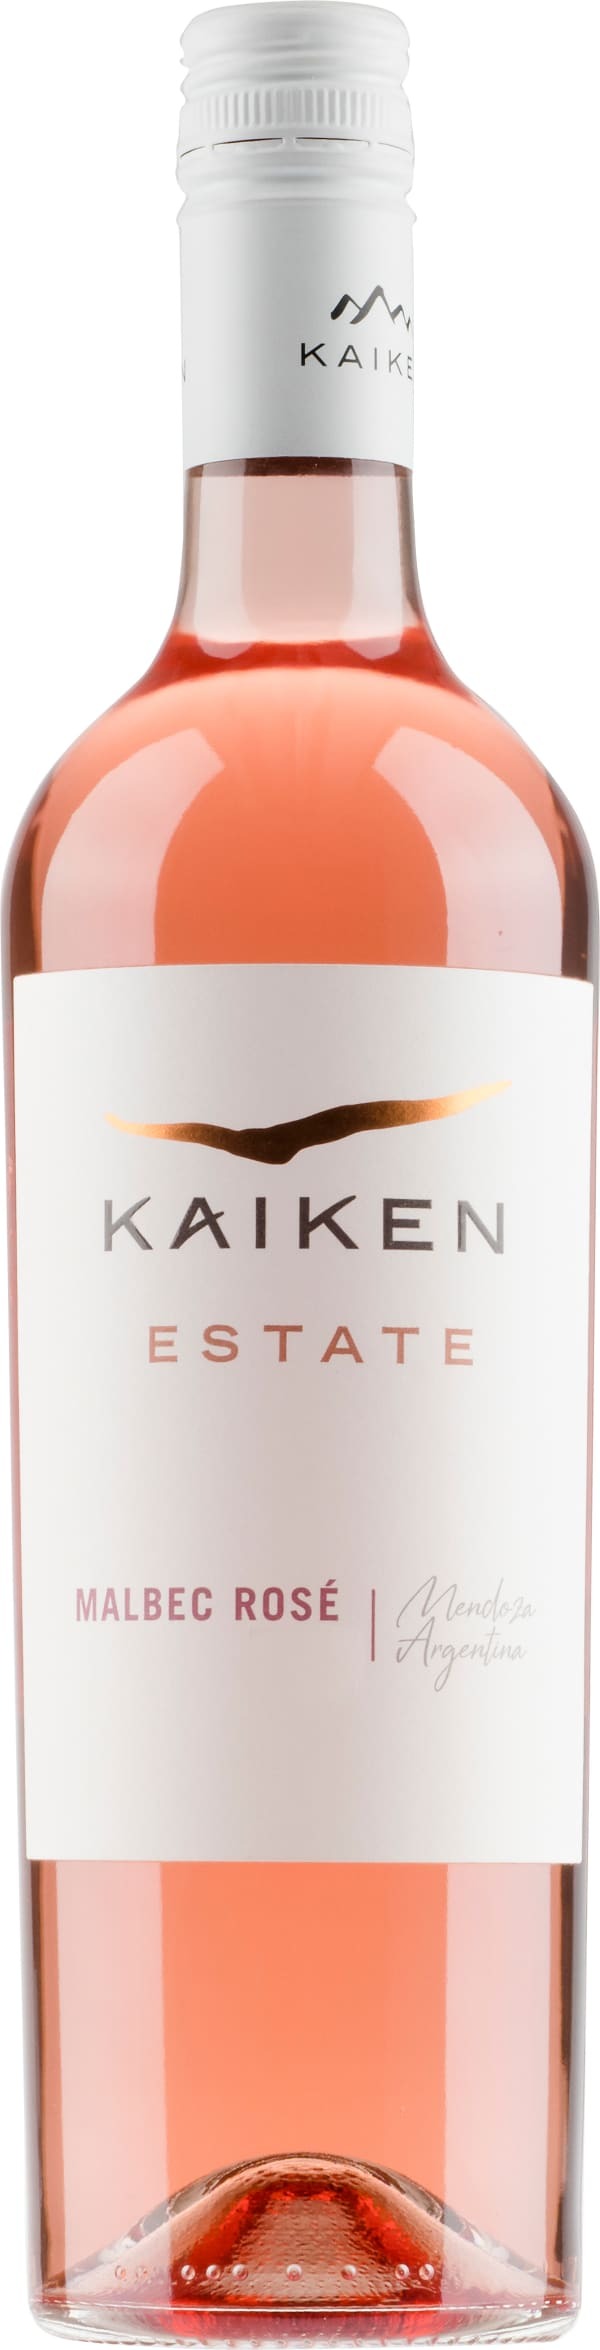 Kaiken Estate Malbec Rosé 2020